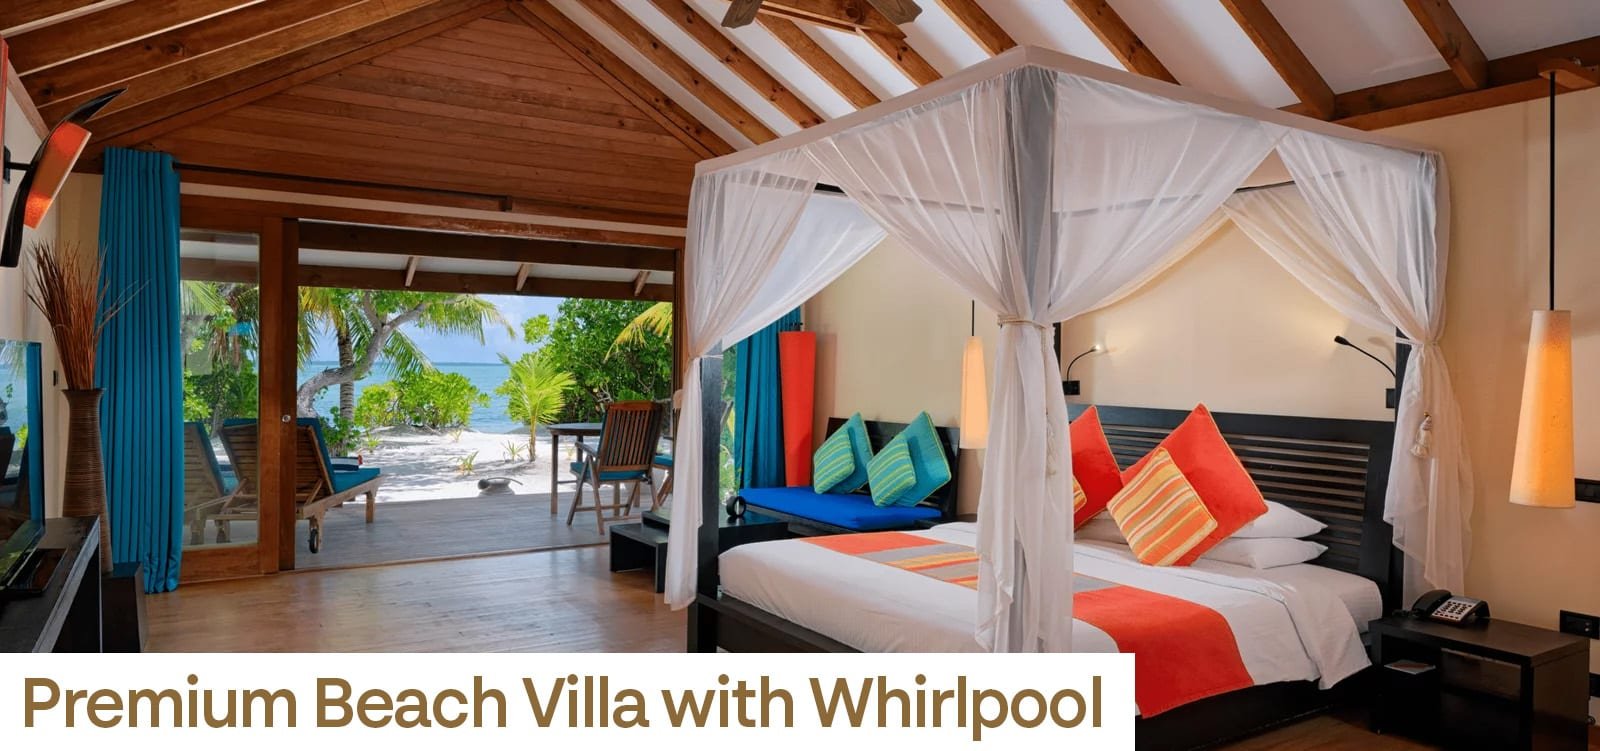 Premium Beach Villa with Whirlpool - Canareef Maldives